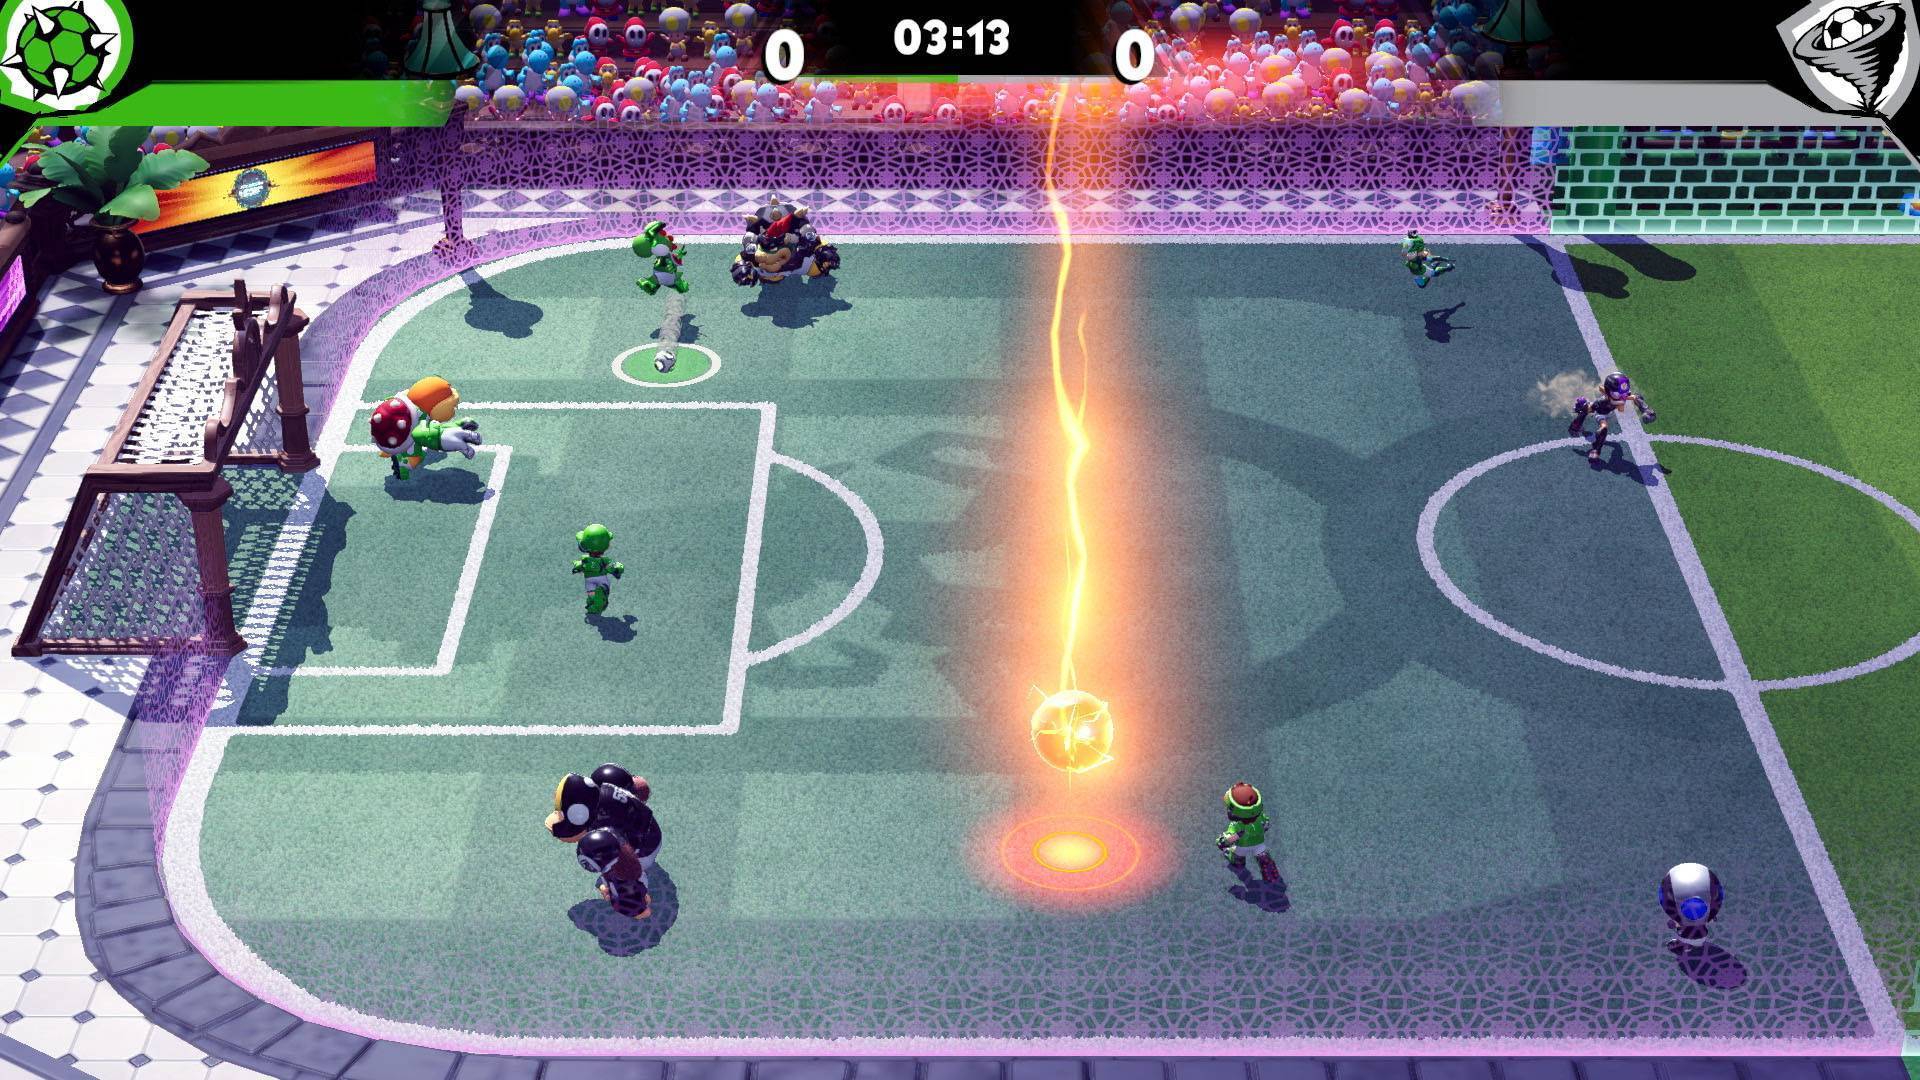 Mario Strikers: Battle League Standard Edition Nintendo Switch Físico